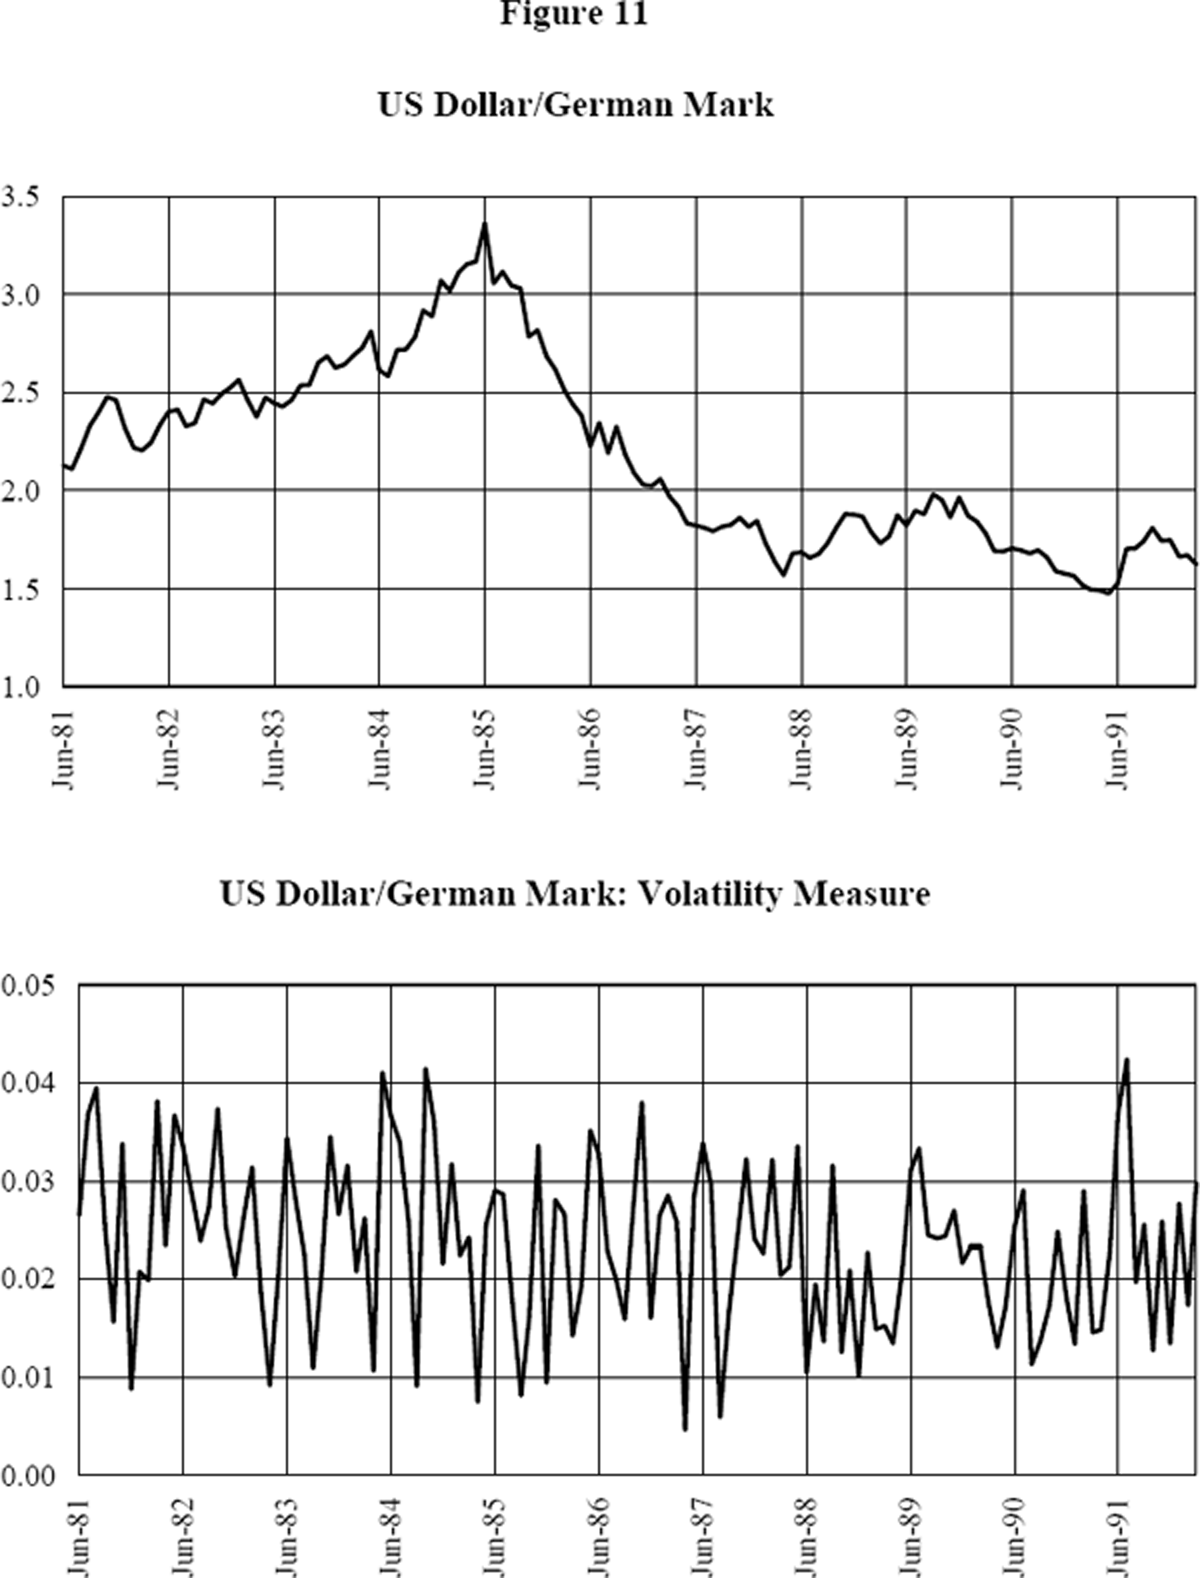 Figure 11: US Dollar/German Mark and Volatility Measure